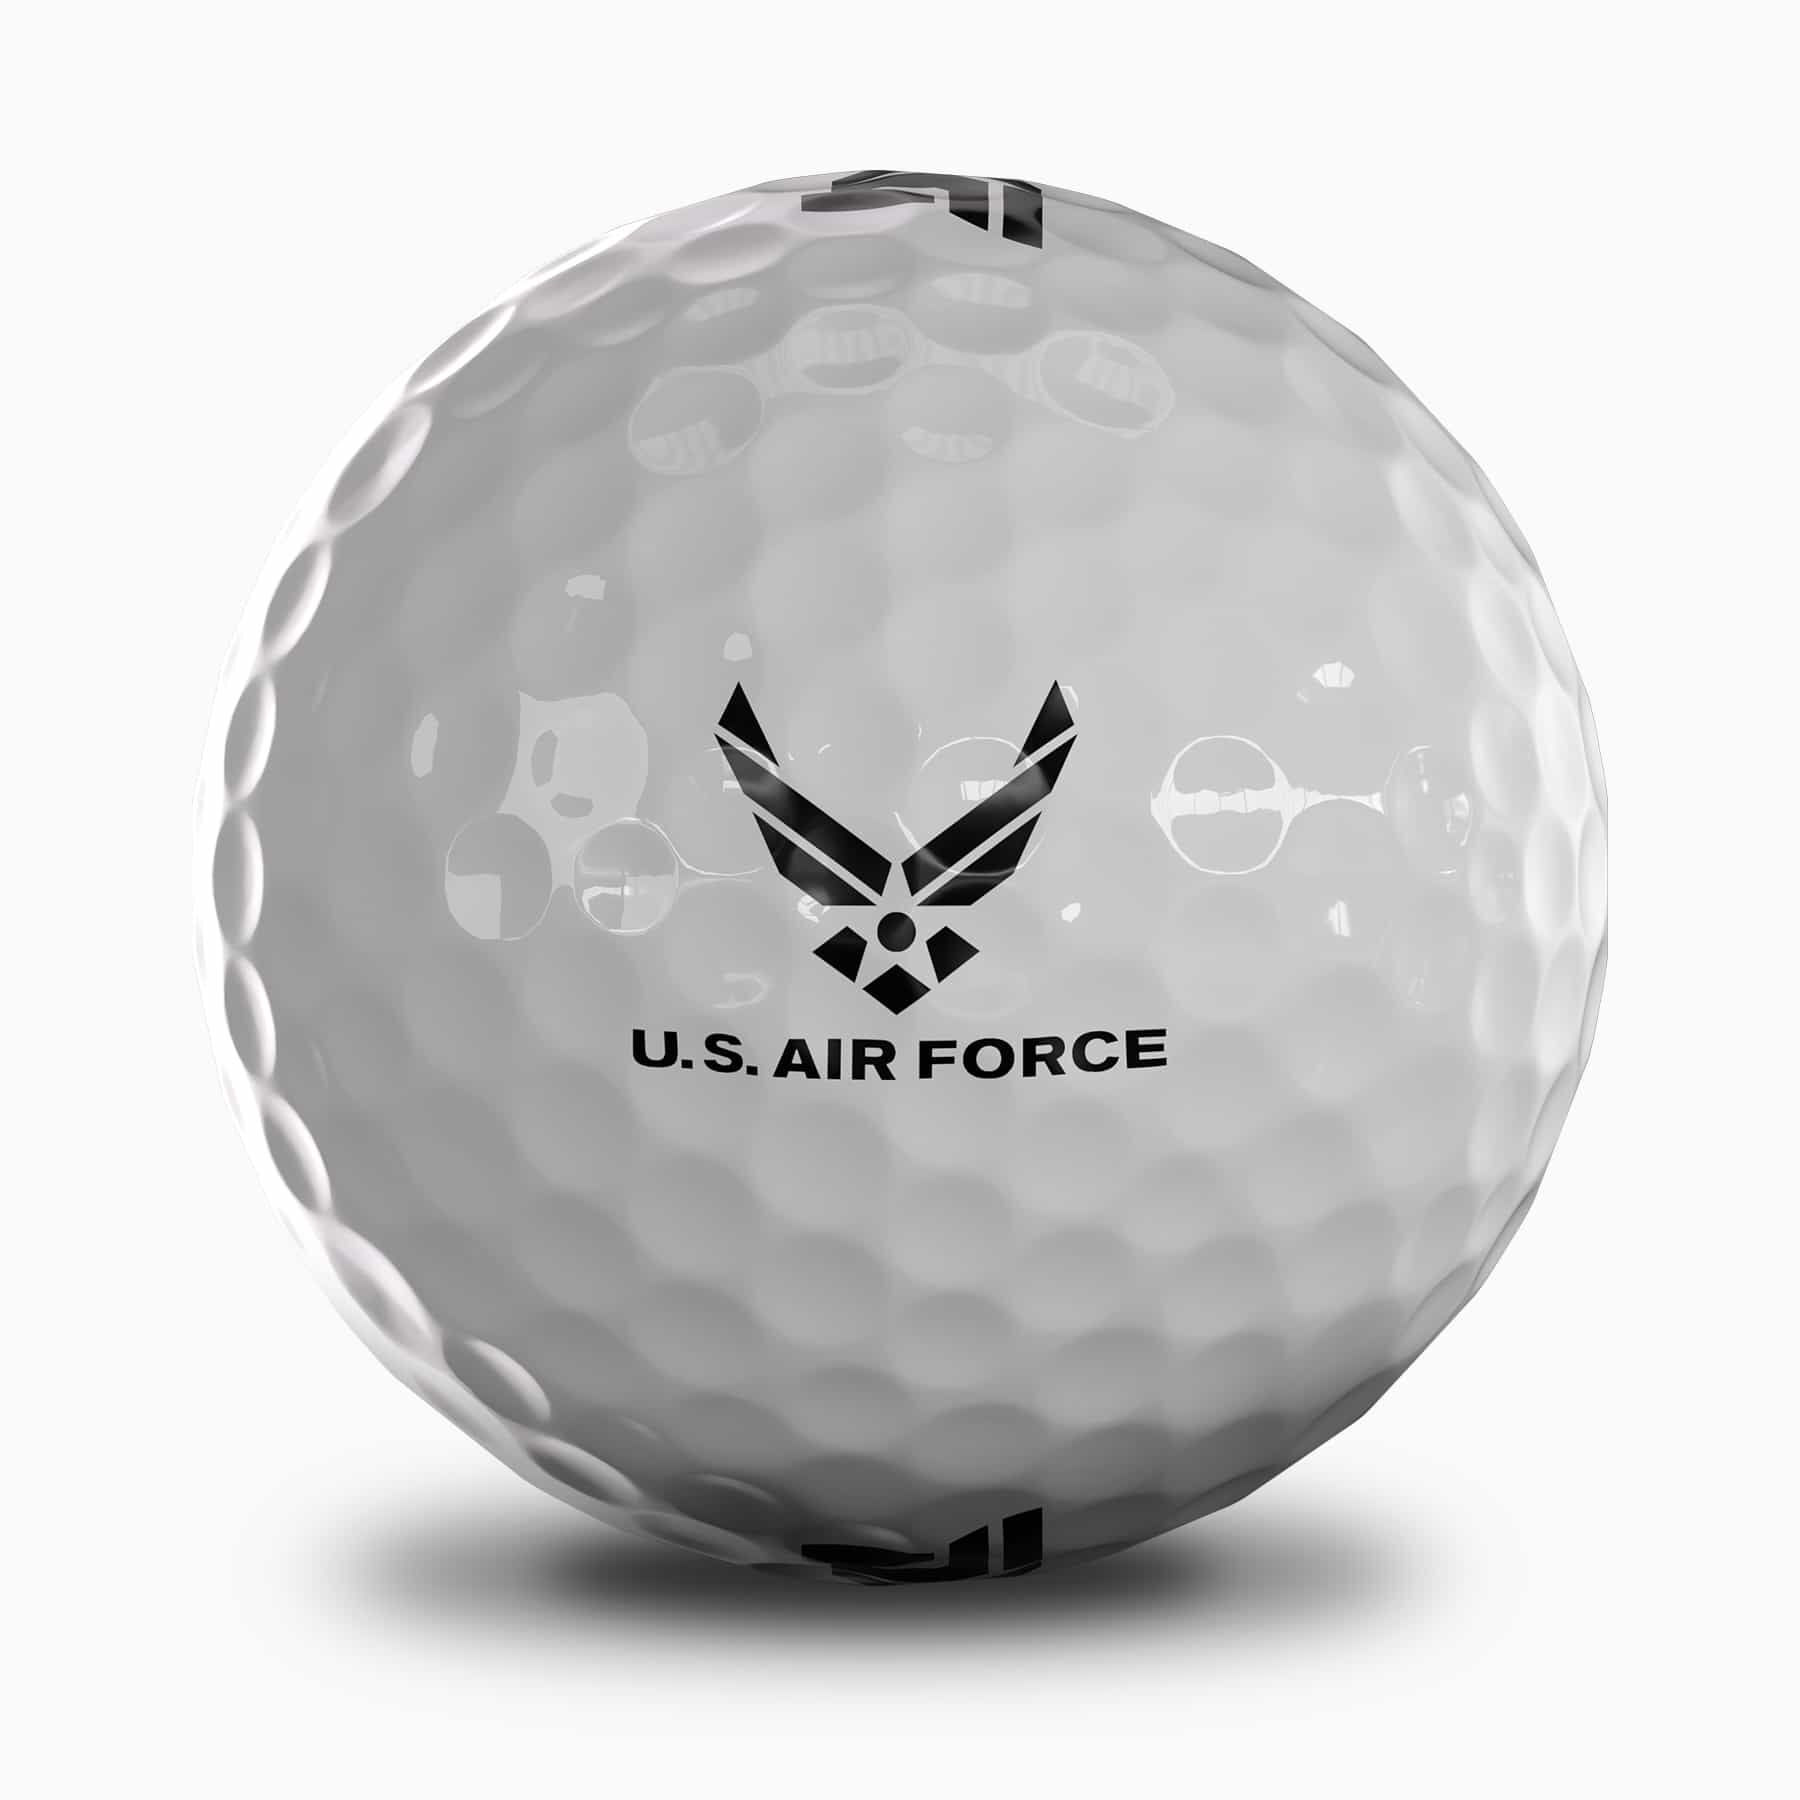 NEW PXG Xtreme Premium Golf Balls Air Force Edition | Golf Balls 